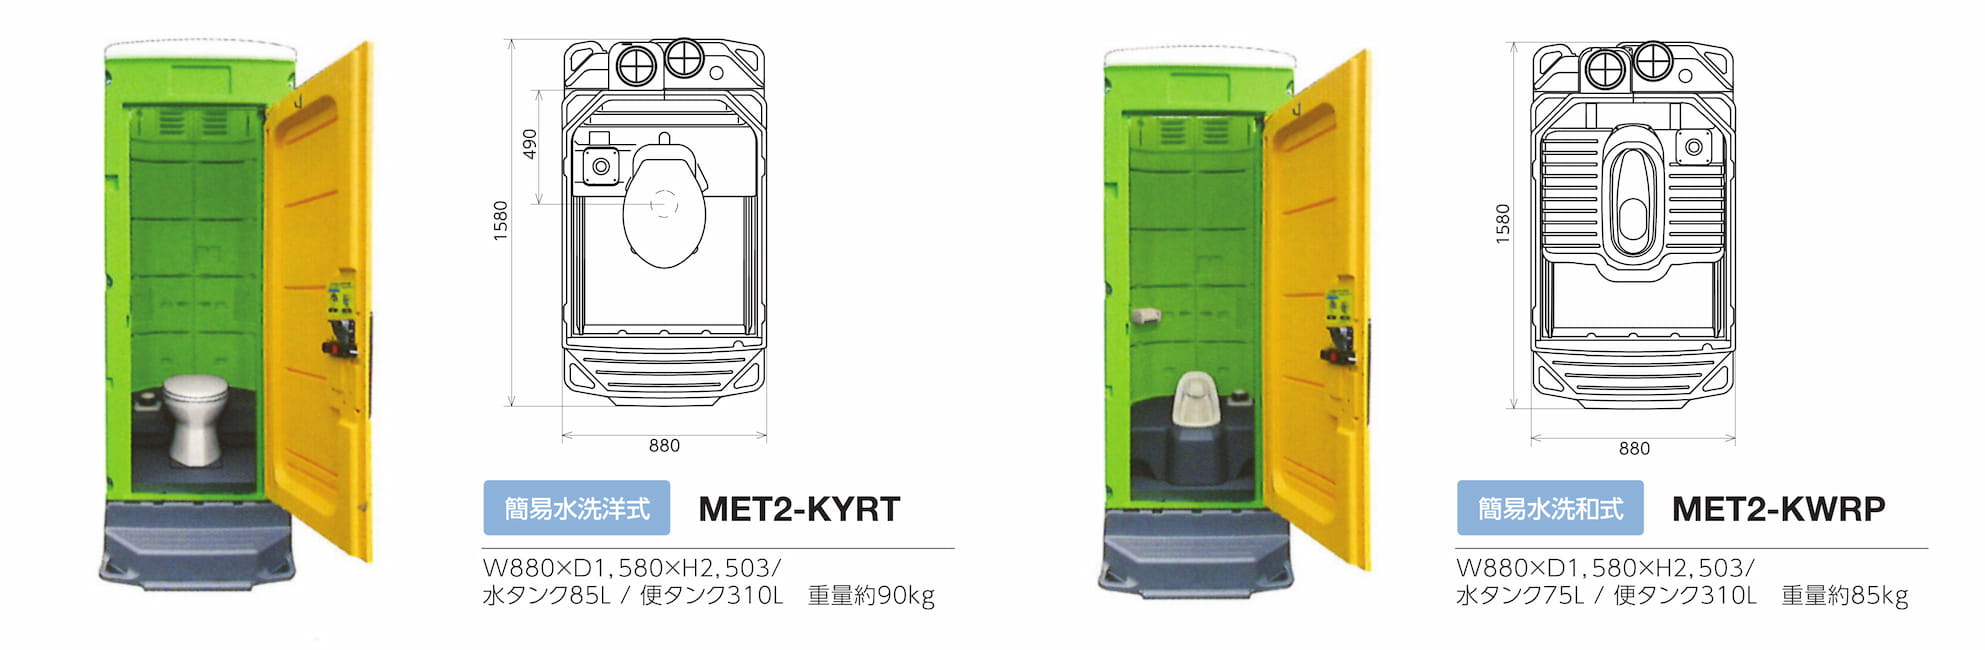 [MET2-KWRP] 仮設トイレ 簡易トイレ 仮設便所 エコットトイレM2 和式 簡易水洗タイプ - 5